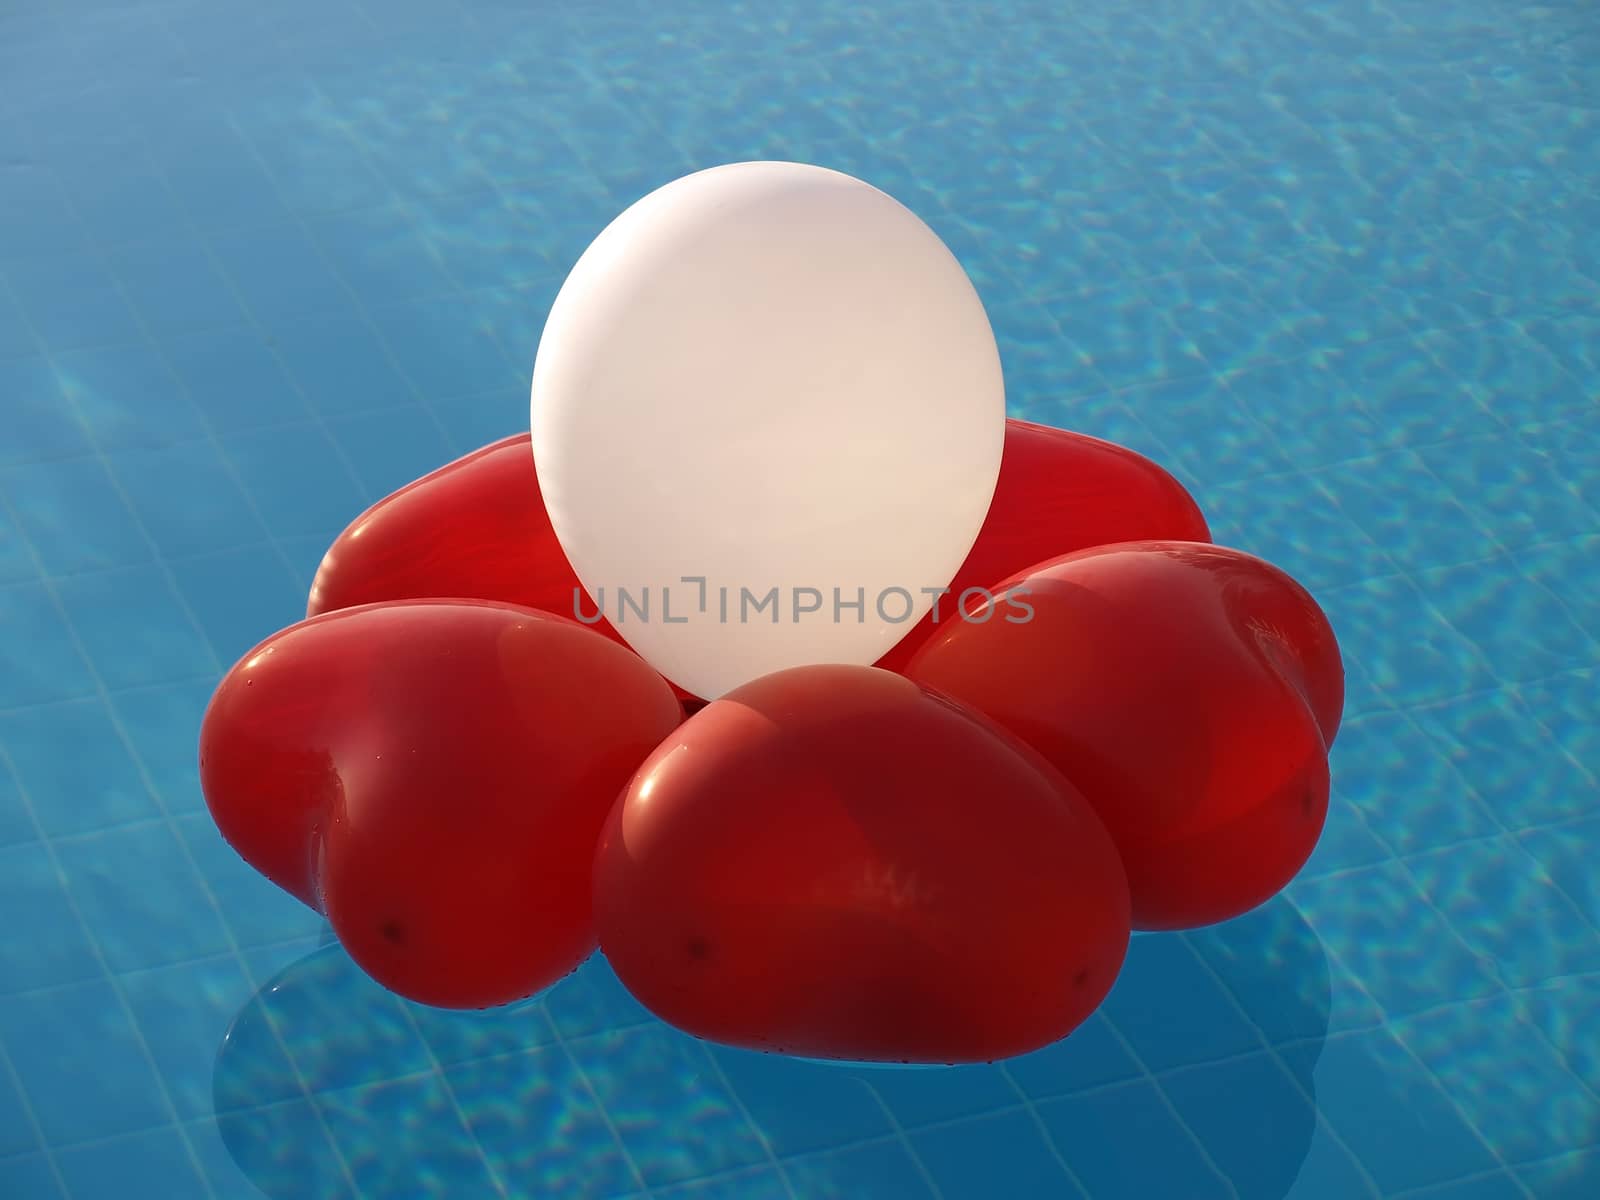 heart shaped balloons02 by Venakr